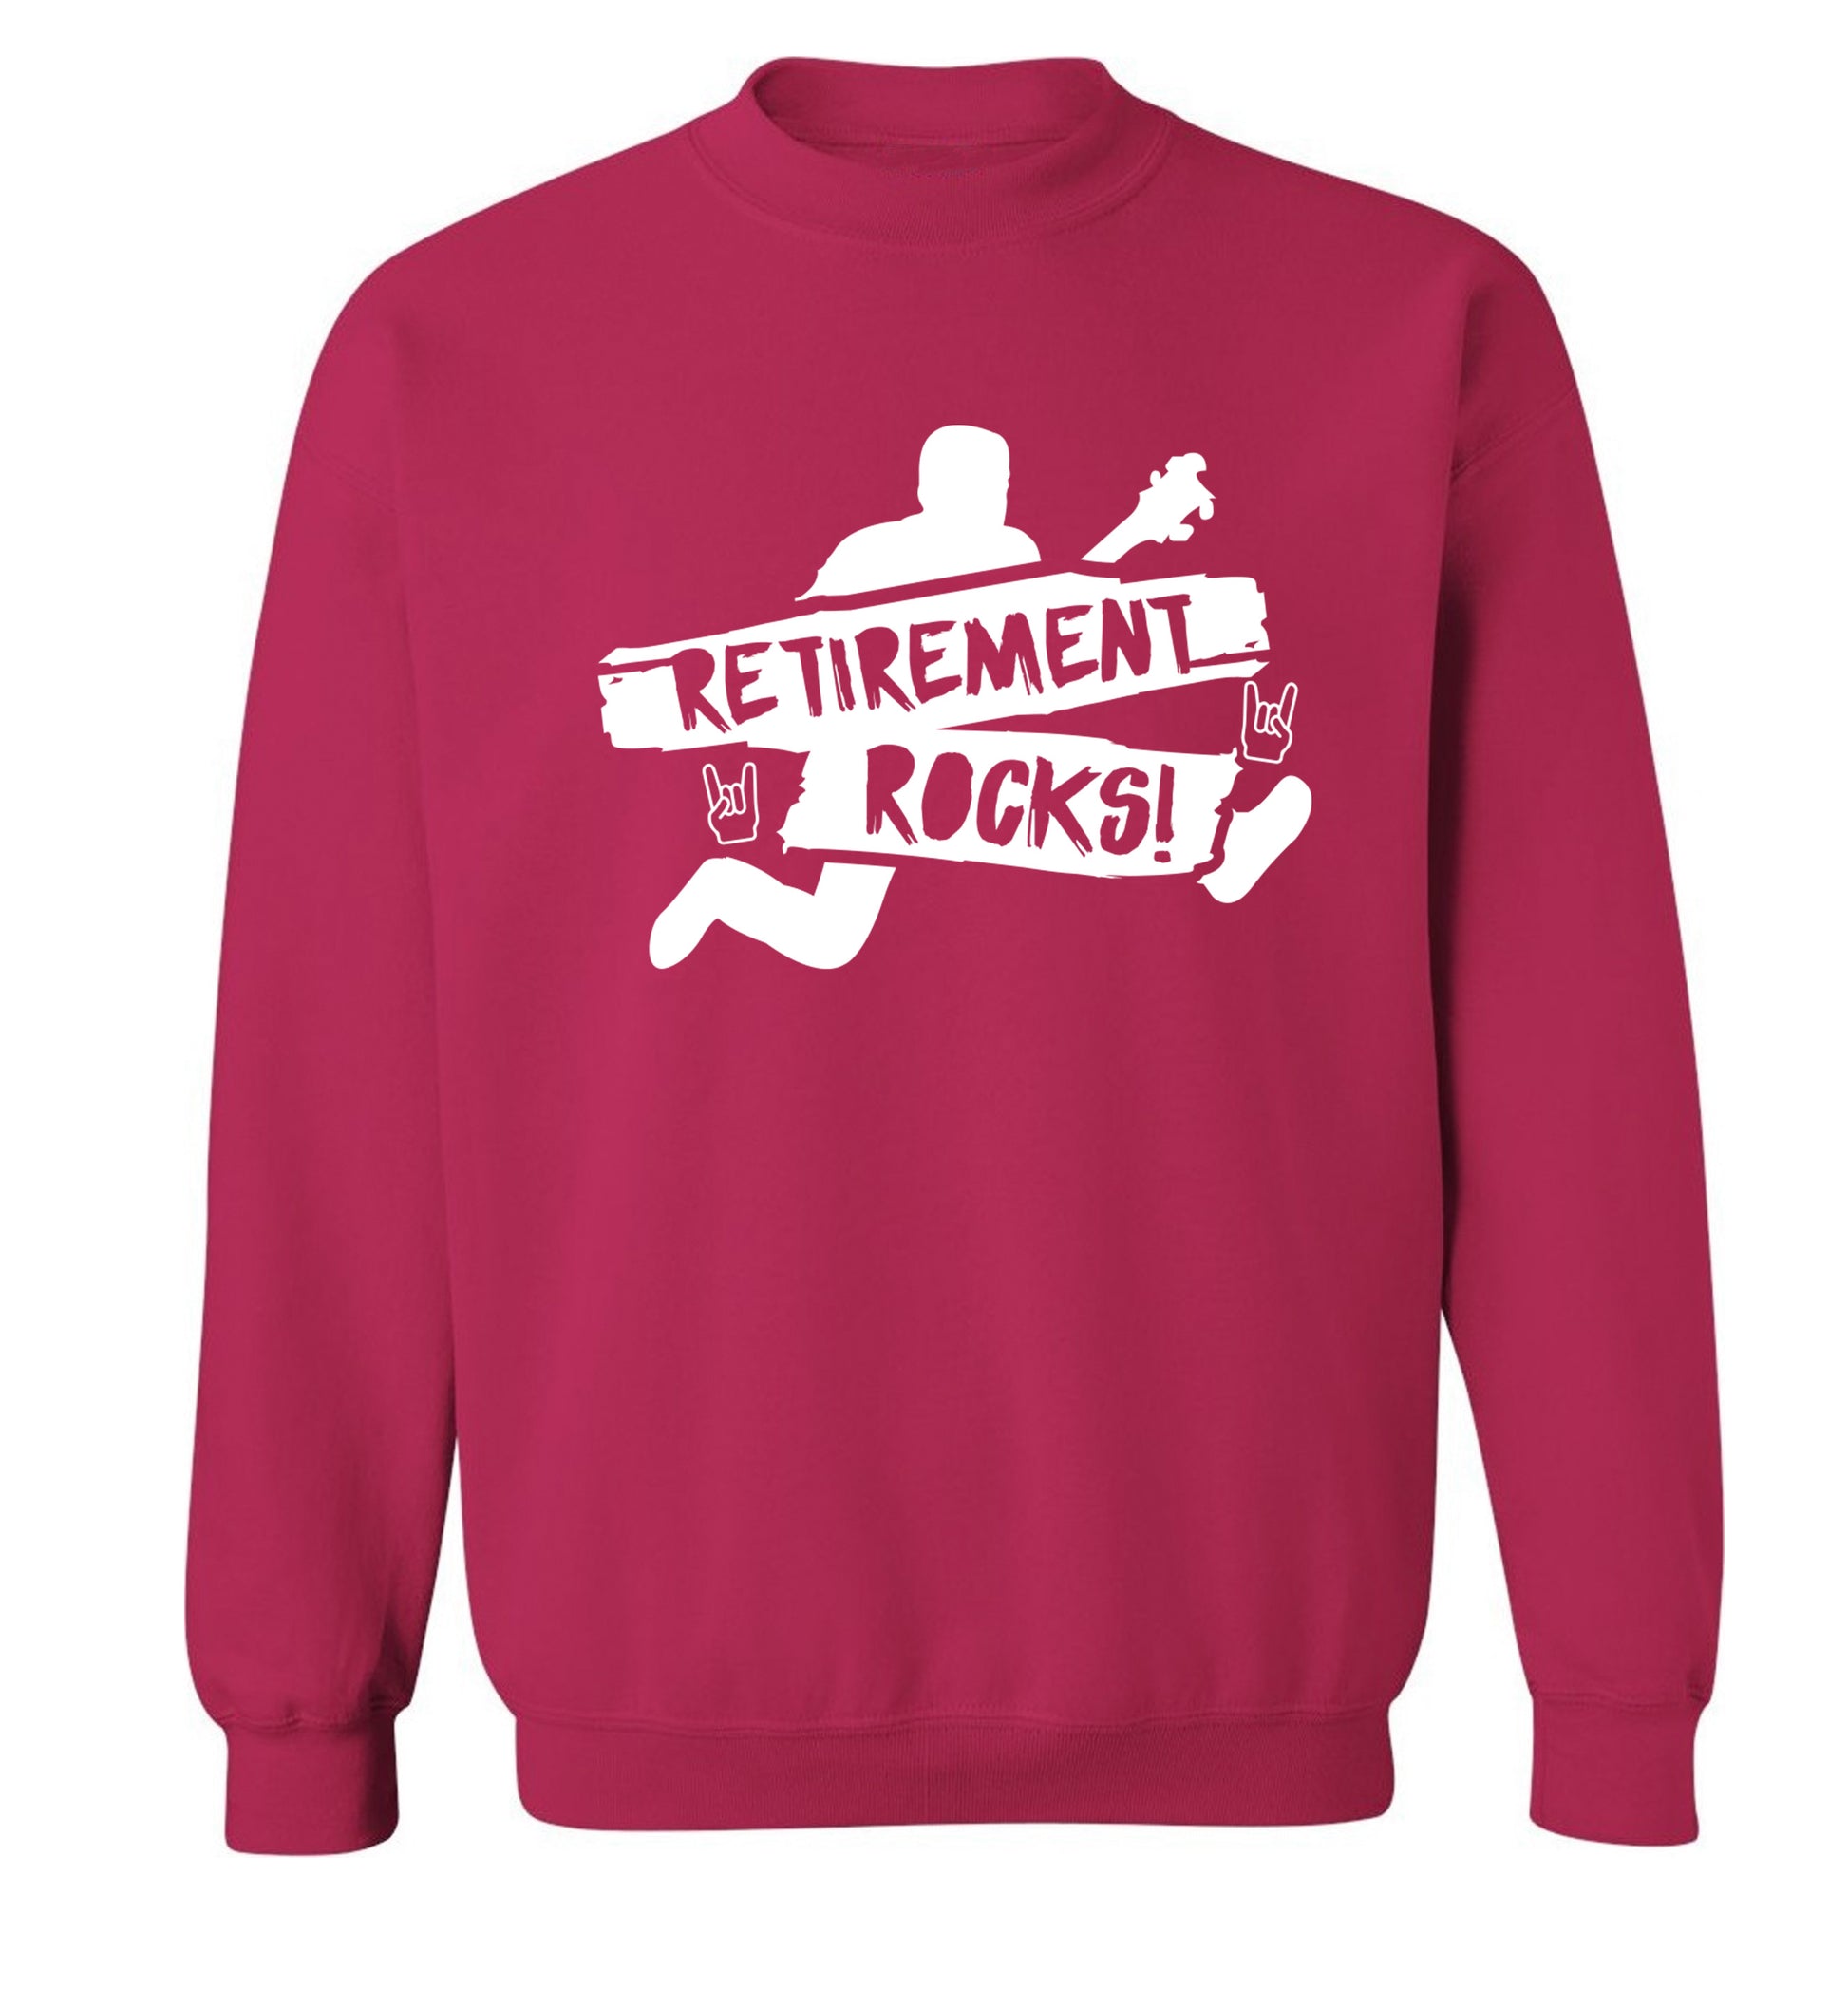 Retirement Rocks Adult's unisex pink Sweater 2XL